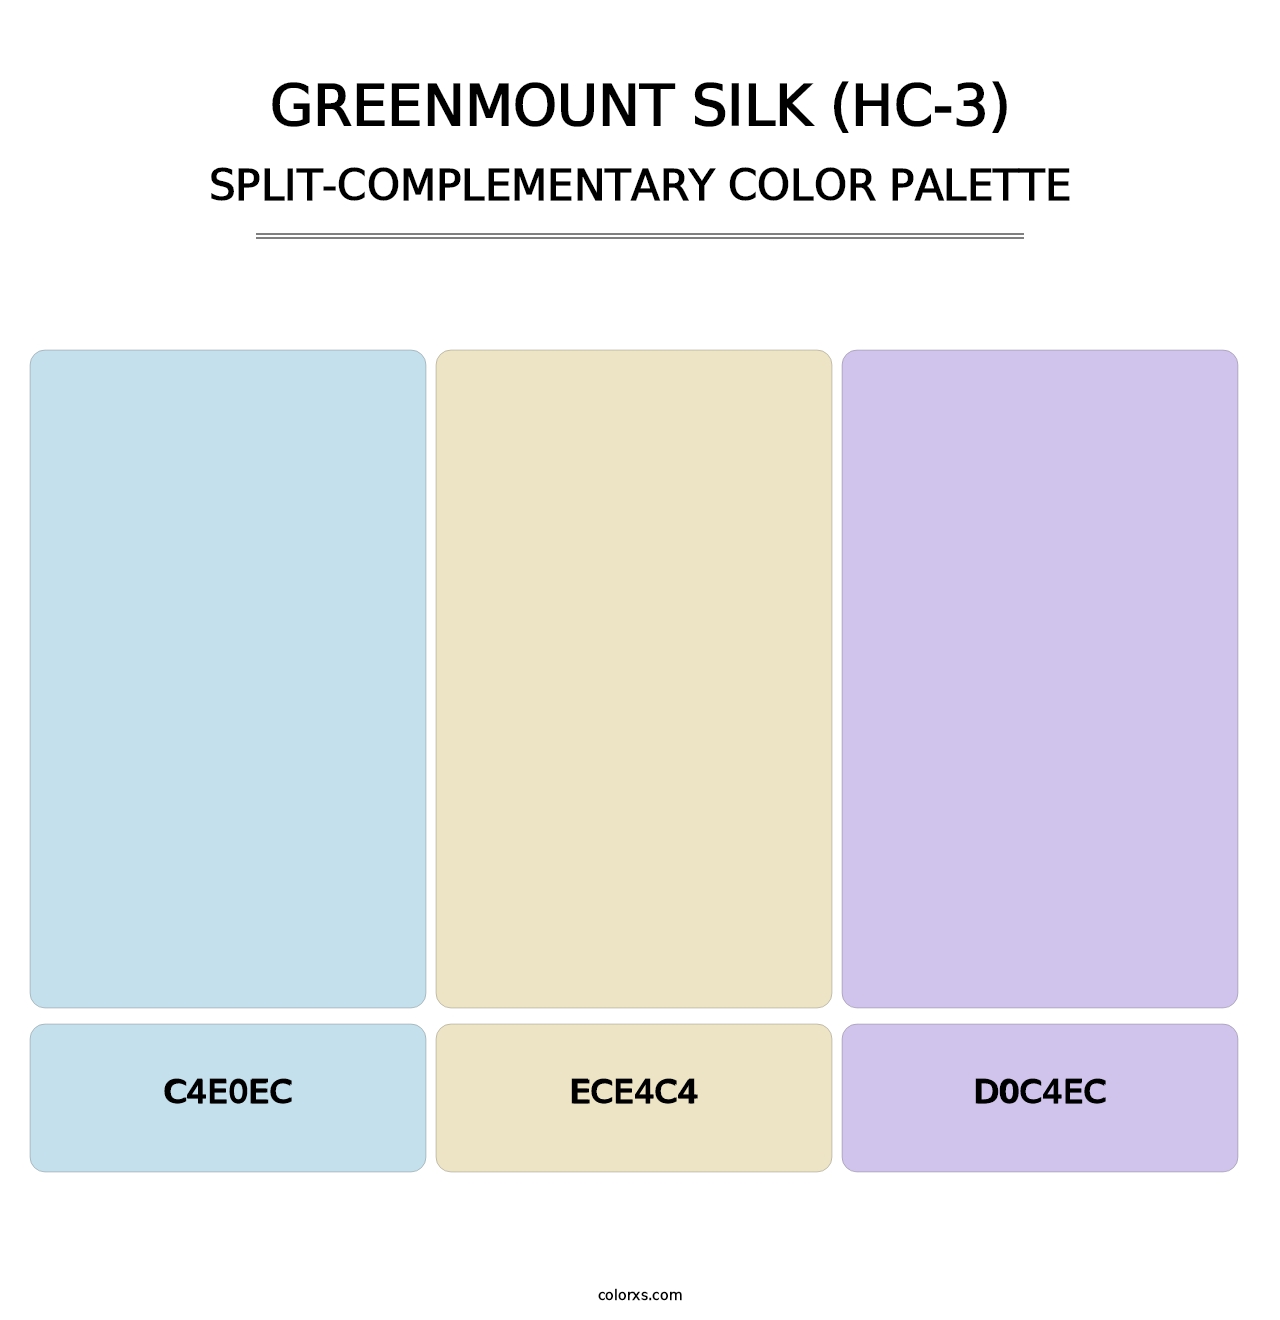 Greenmount Silk (HC-3) - Split-Complementary Color Palette